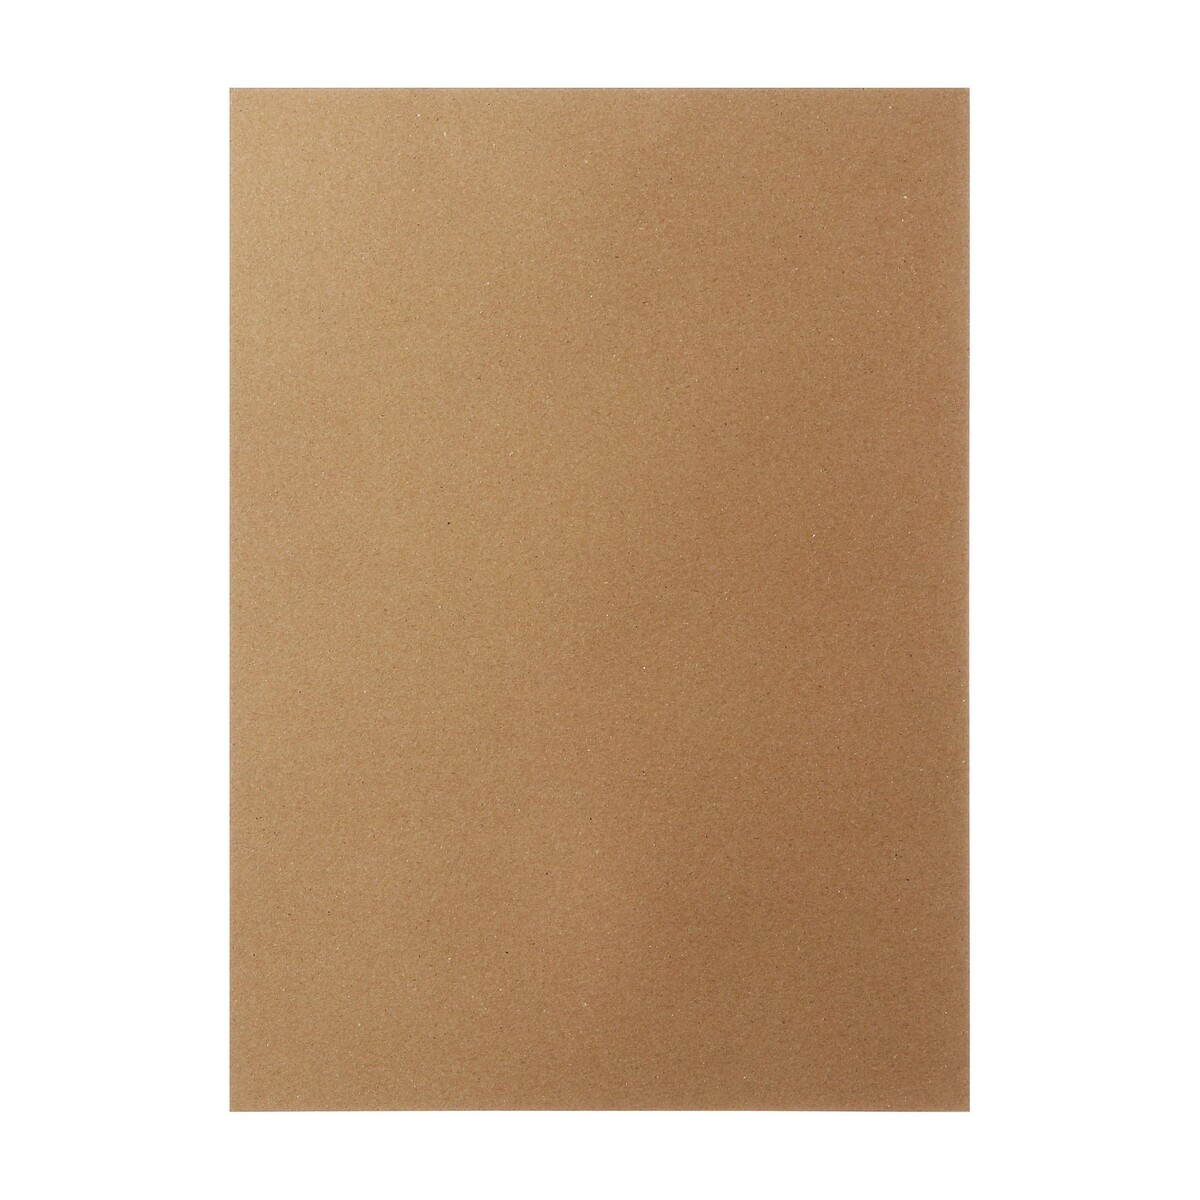 Крафт-бумага, 300 х 420 мм, 170 г/м2, набор 25л, коричневая Calligrata, цвет коричневый 06151391 - фото 2